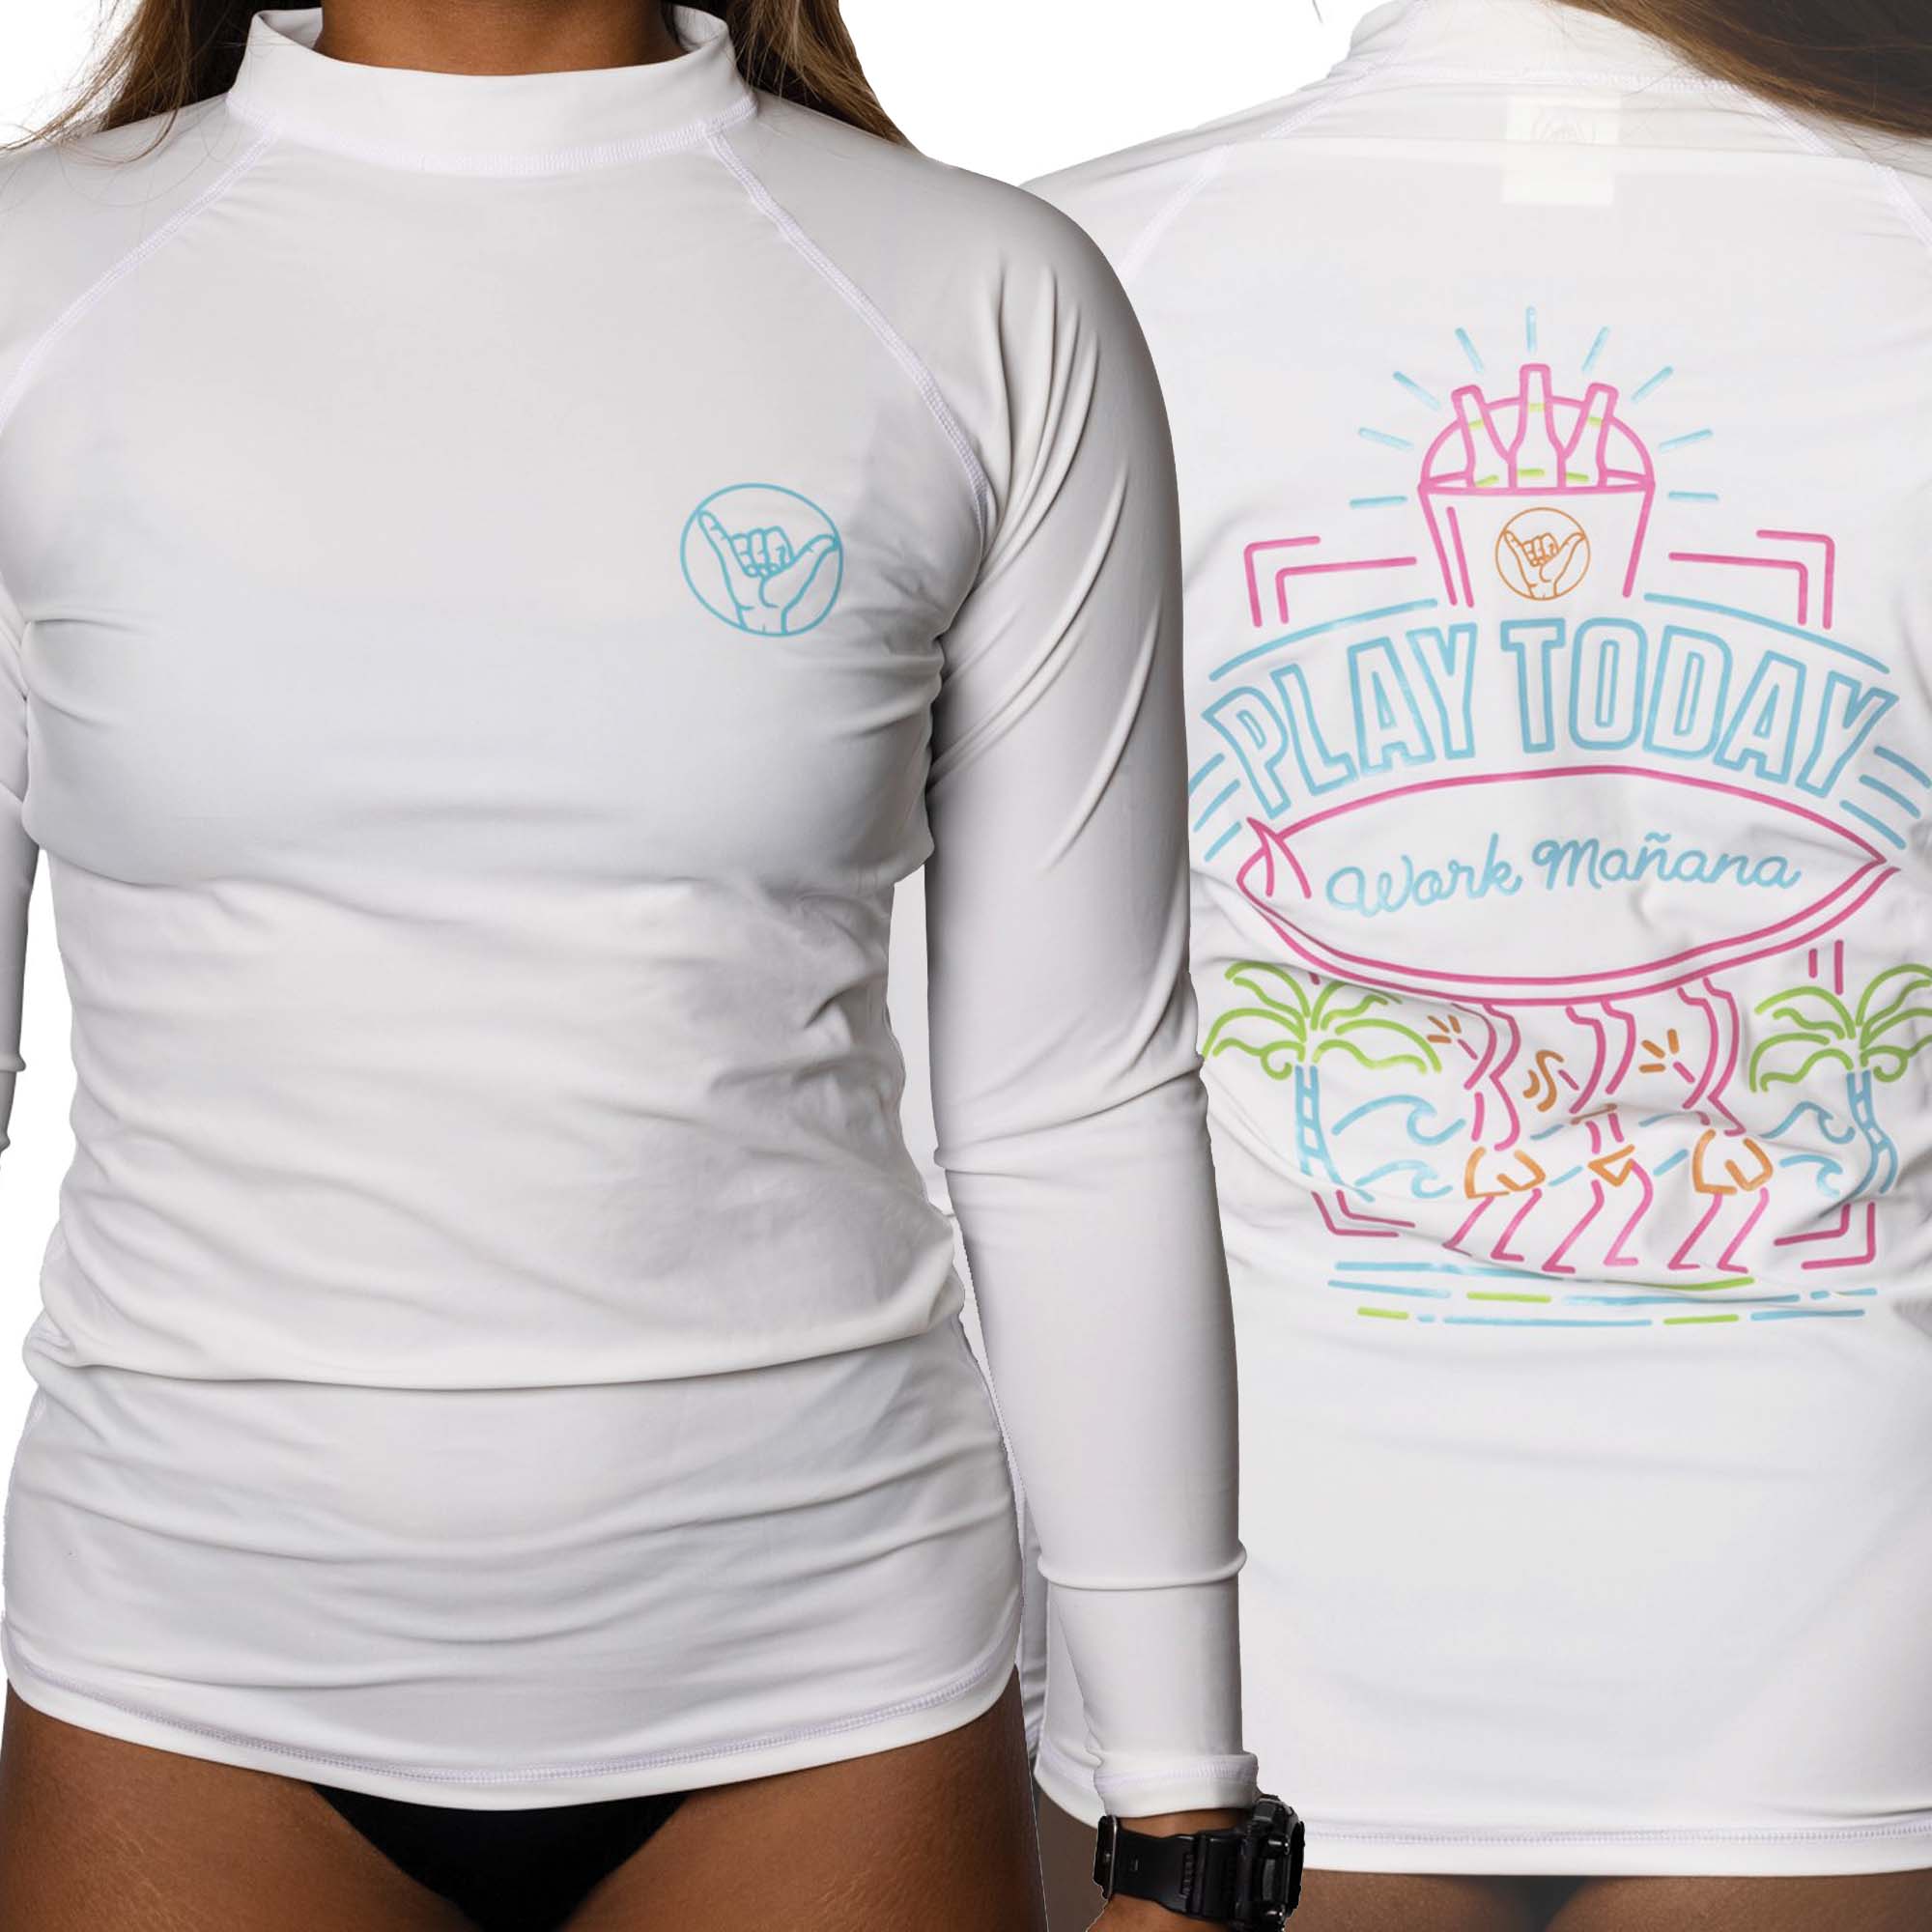 Womens Rash Guard Short Sleeve Surf Shirt | Aqua Design